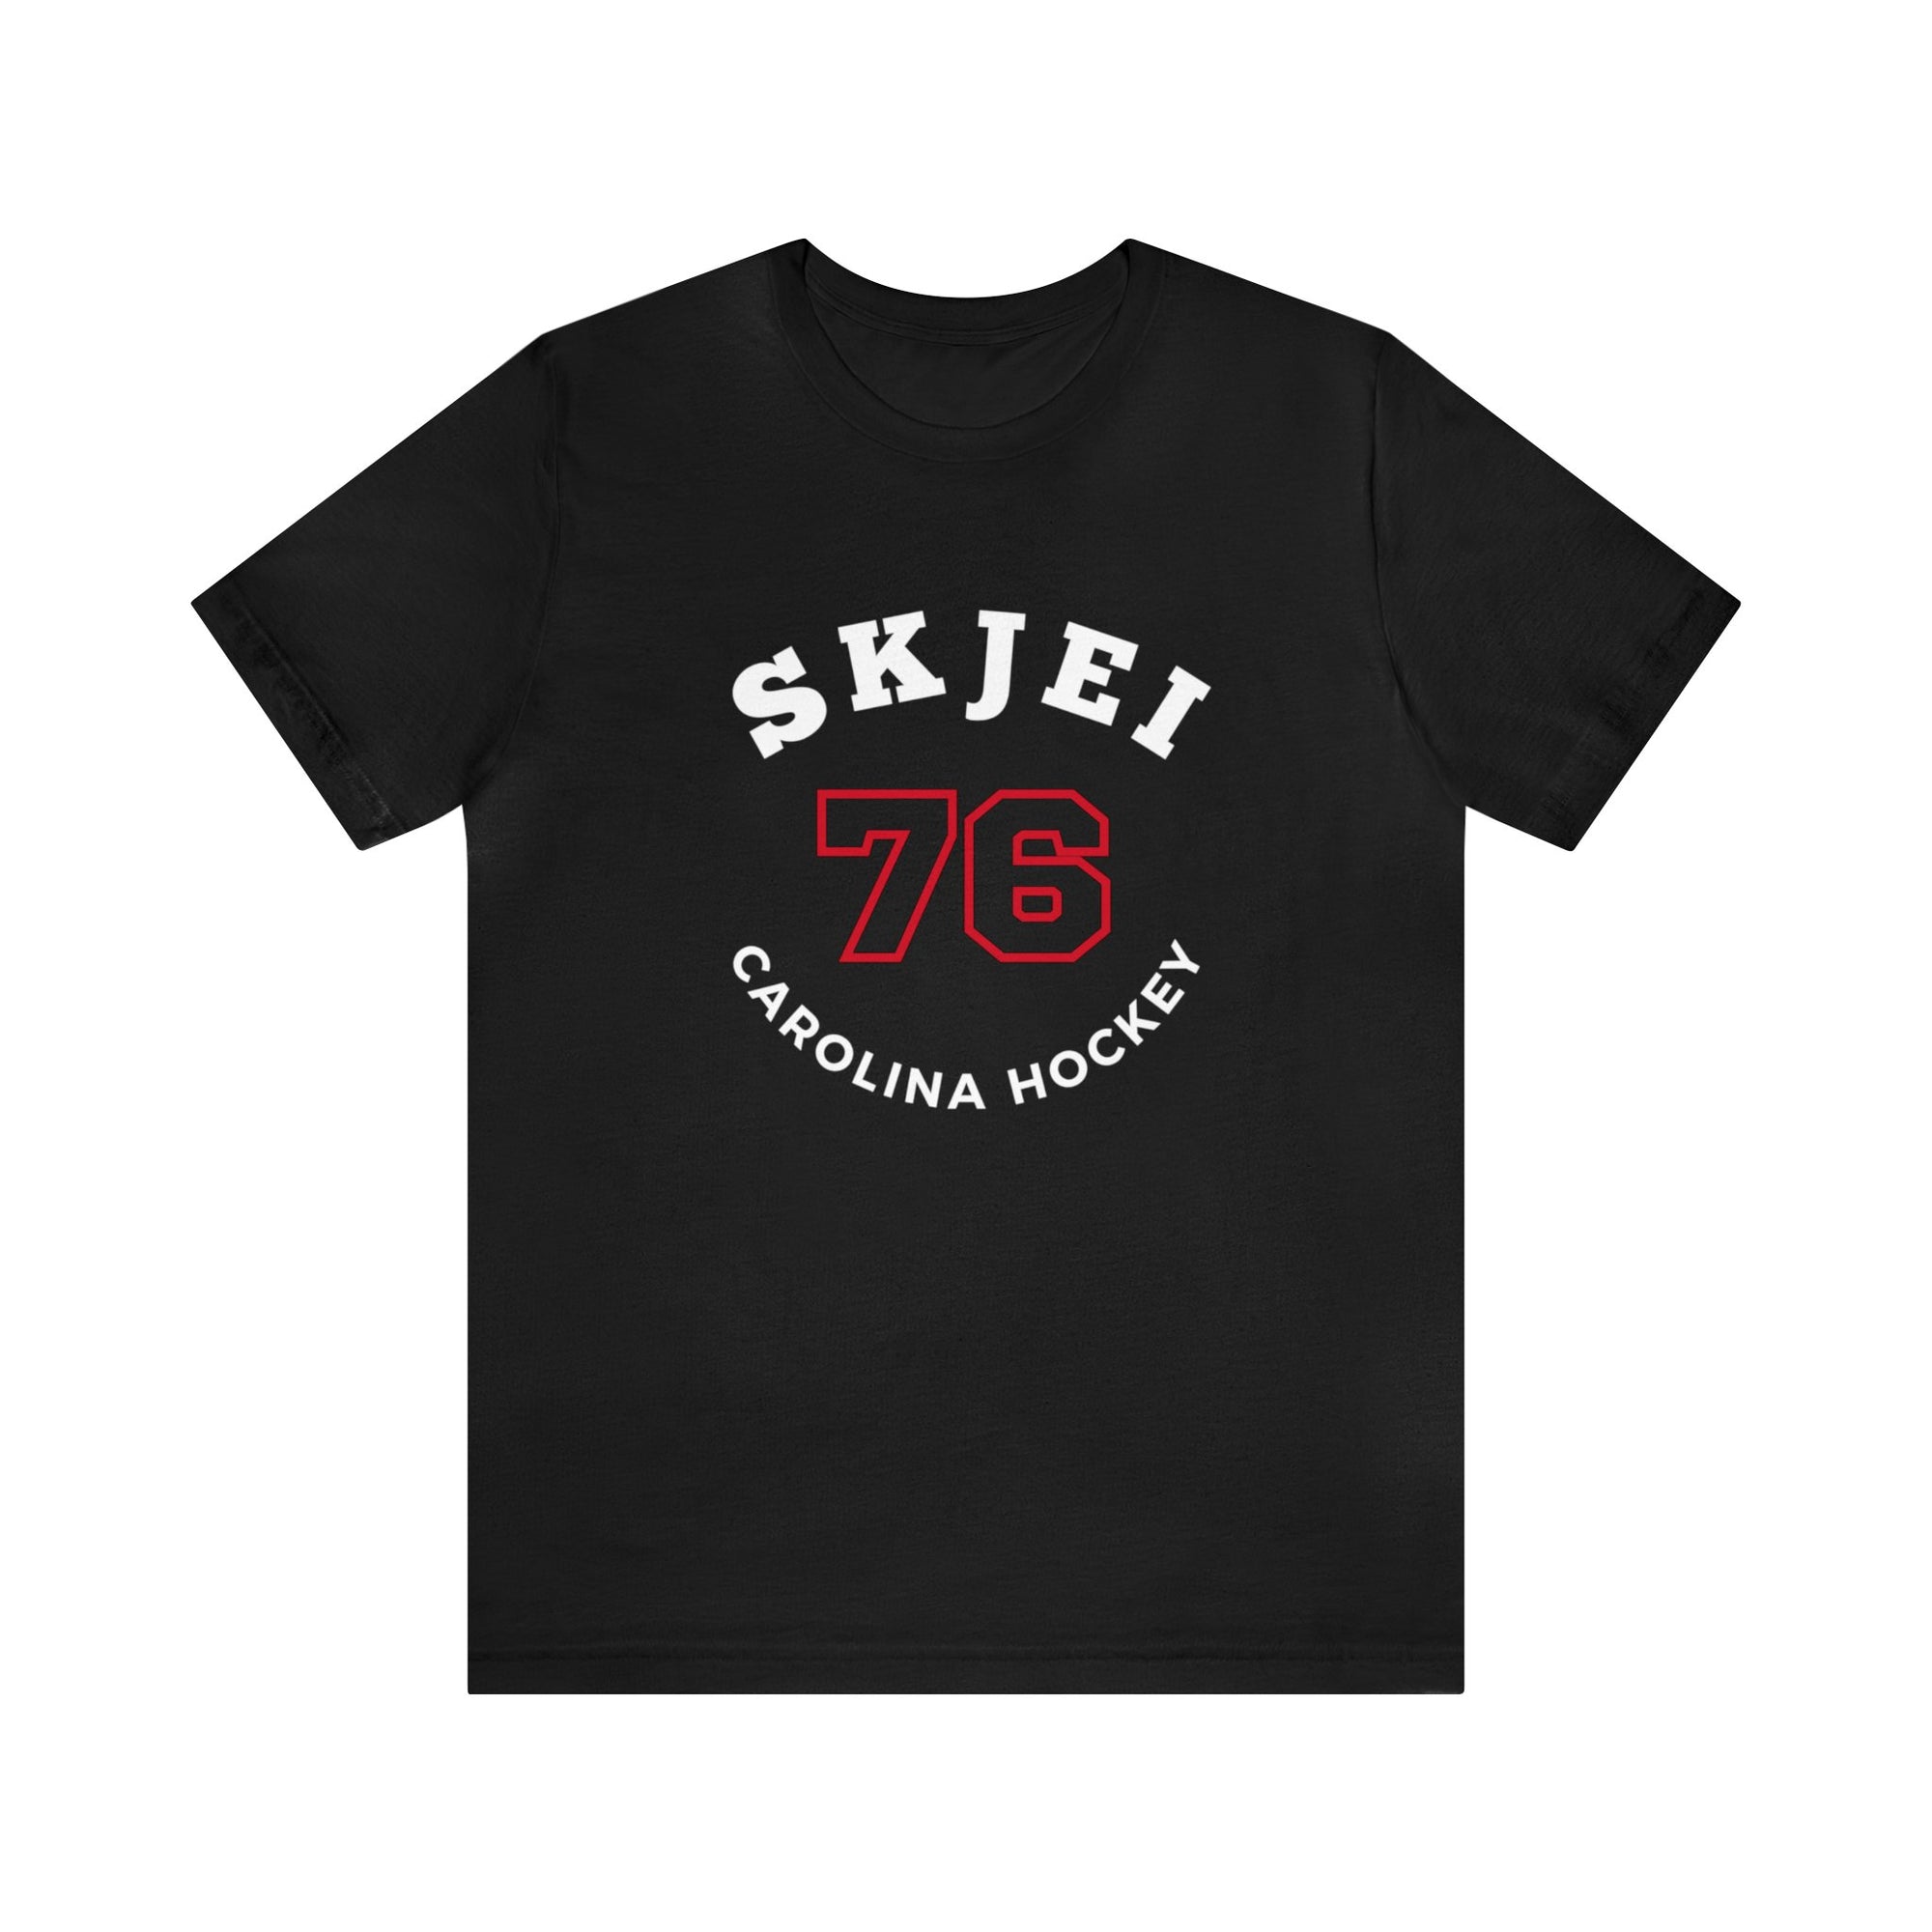 Skjei 76 Carolina Hockey Number Arch Design Unisex T-Shirt